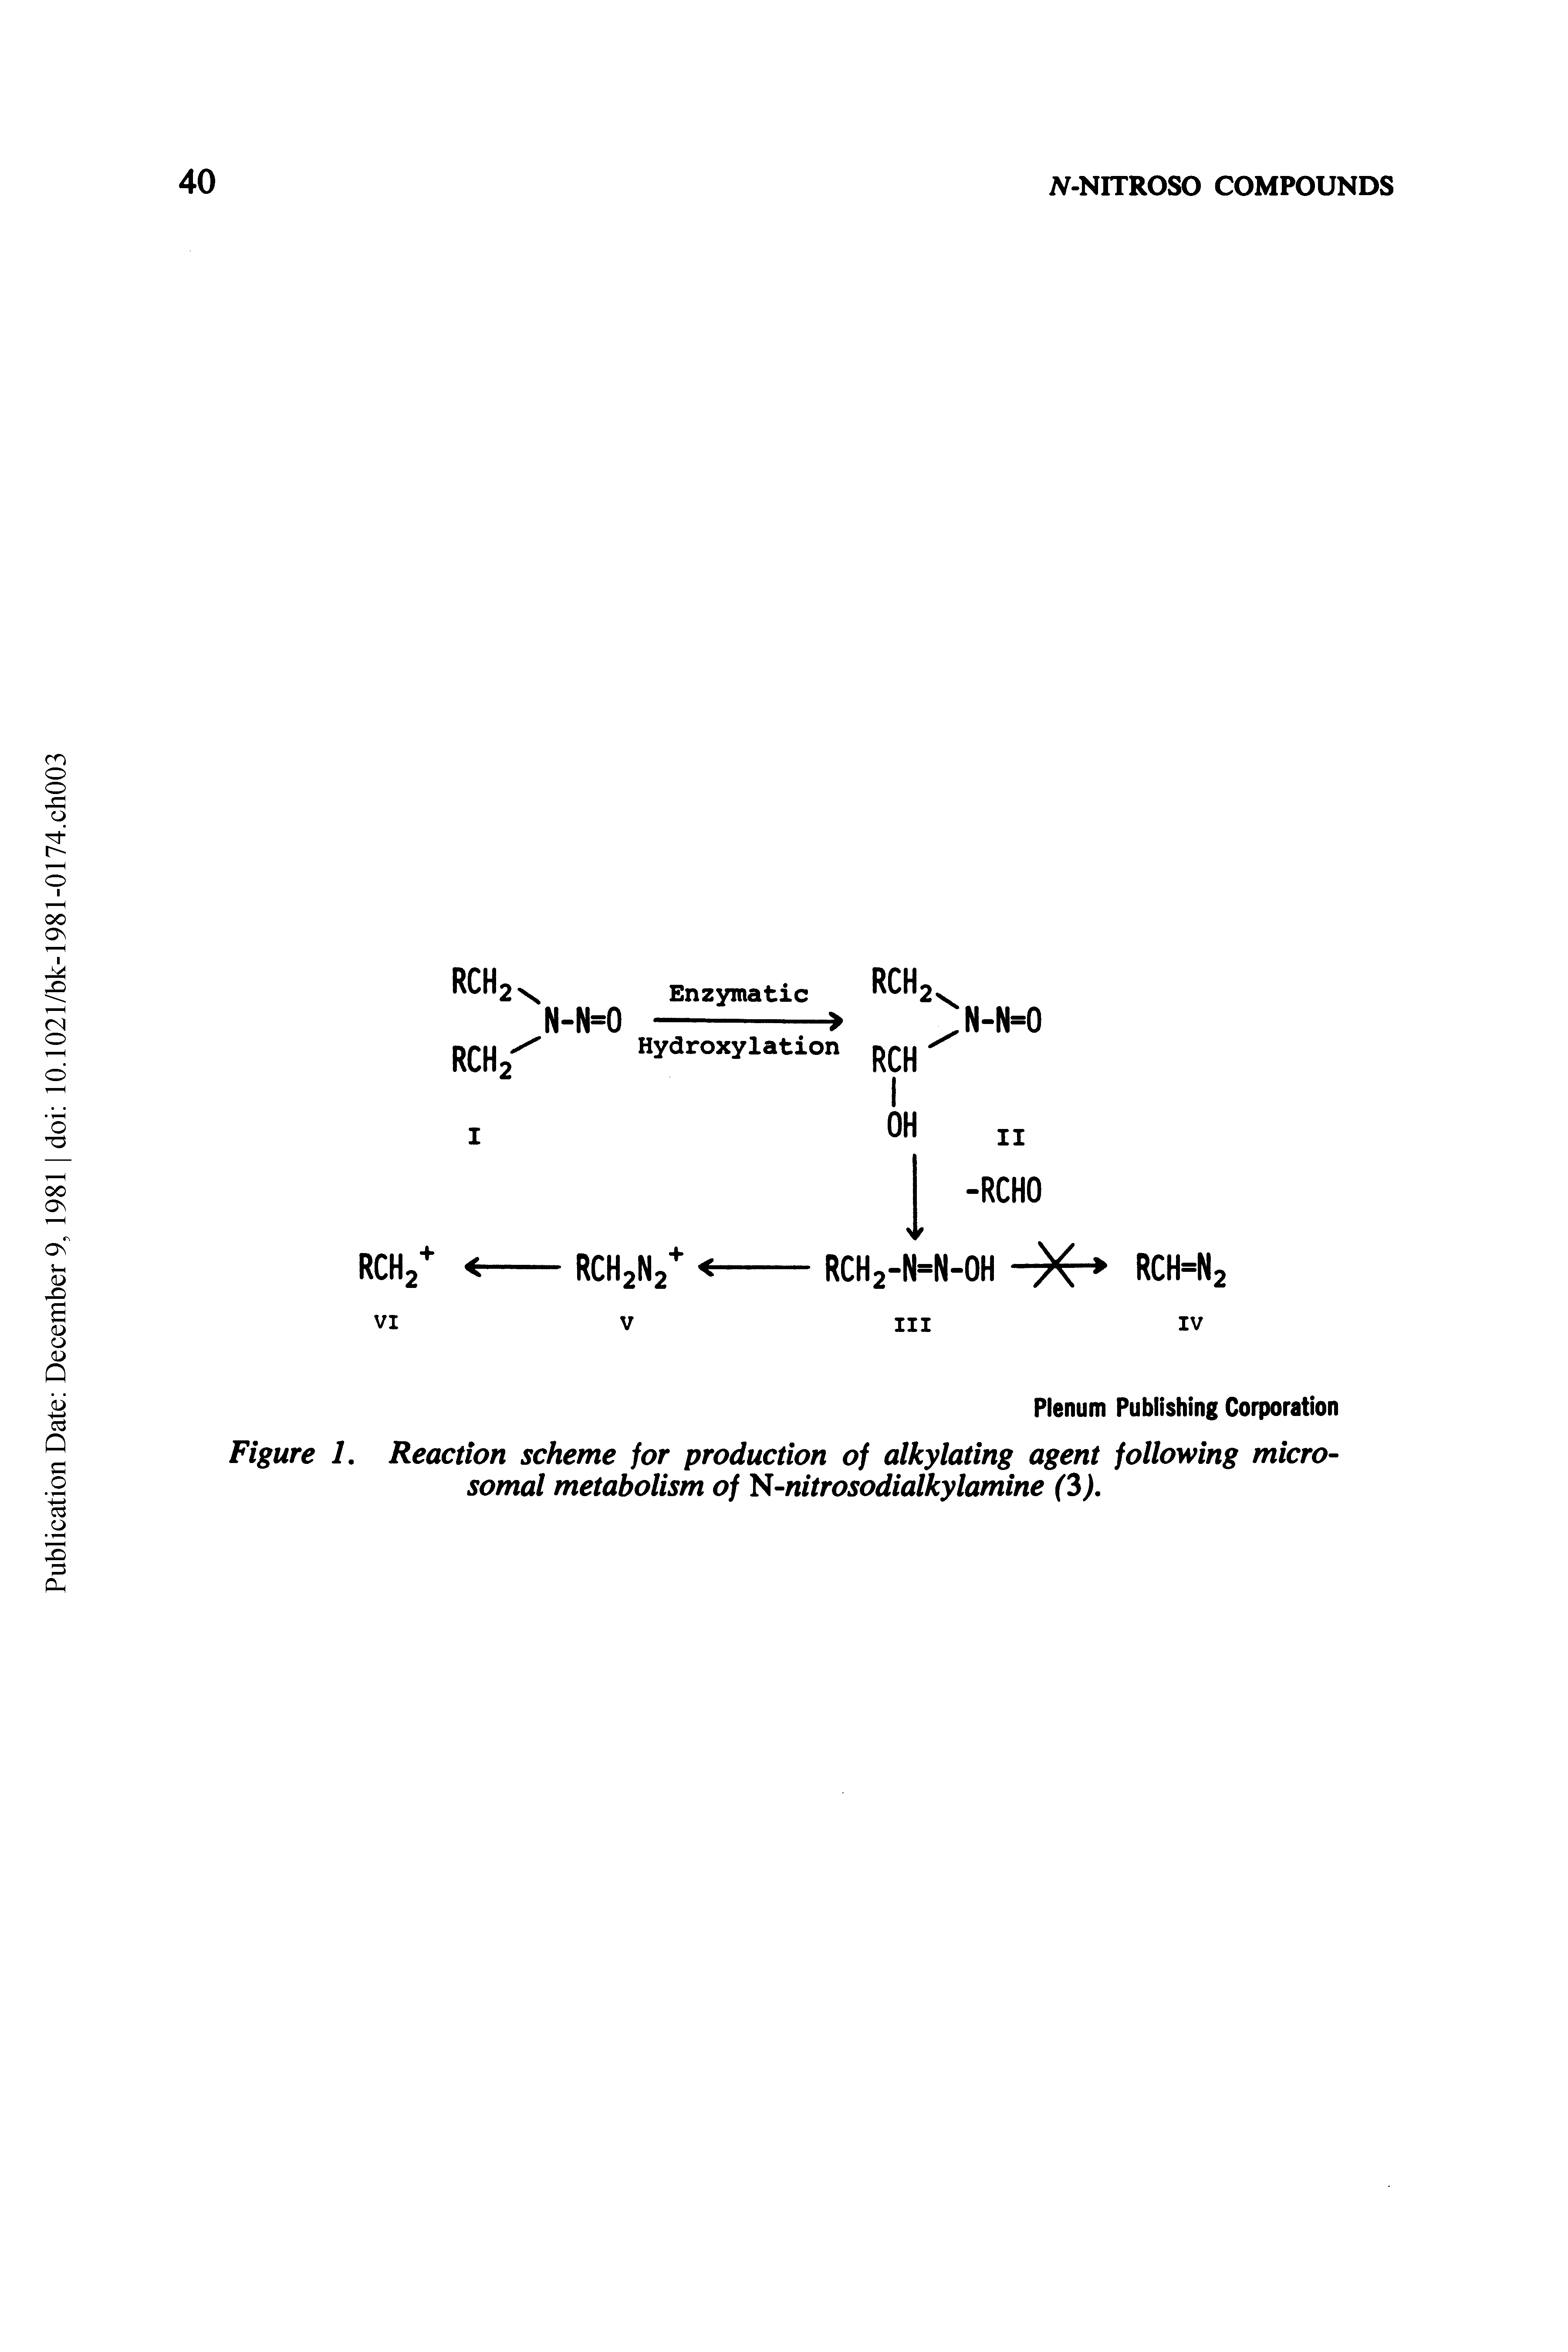 Figure 1. Reaction scheme for production of alkylating agent following microsomal metabolism of S-nitrosodialkylamine (3),...